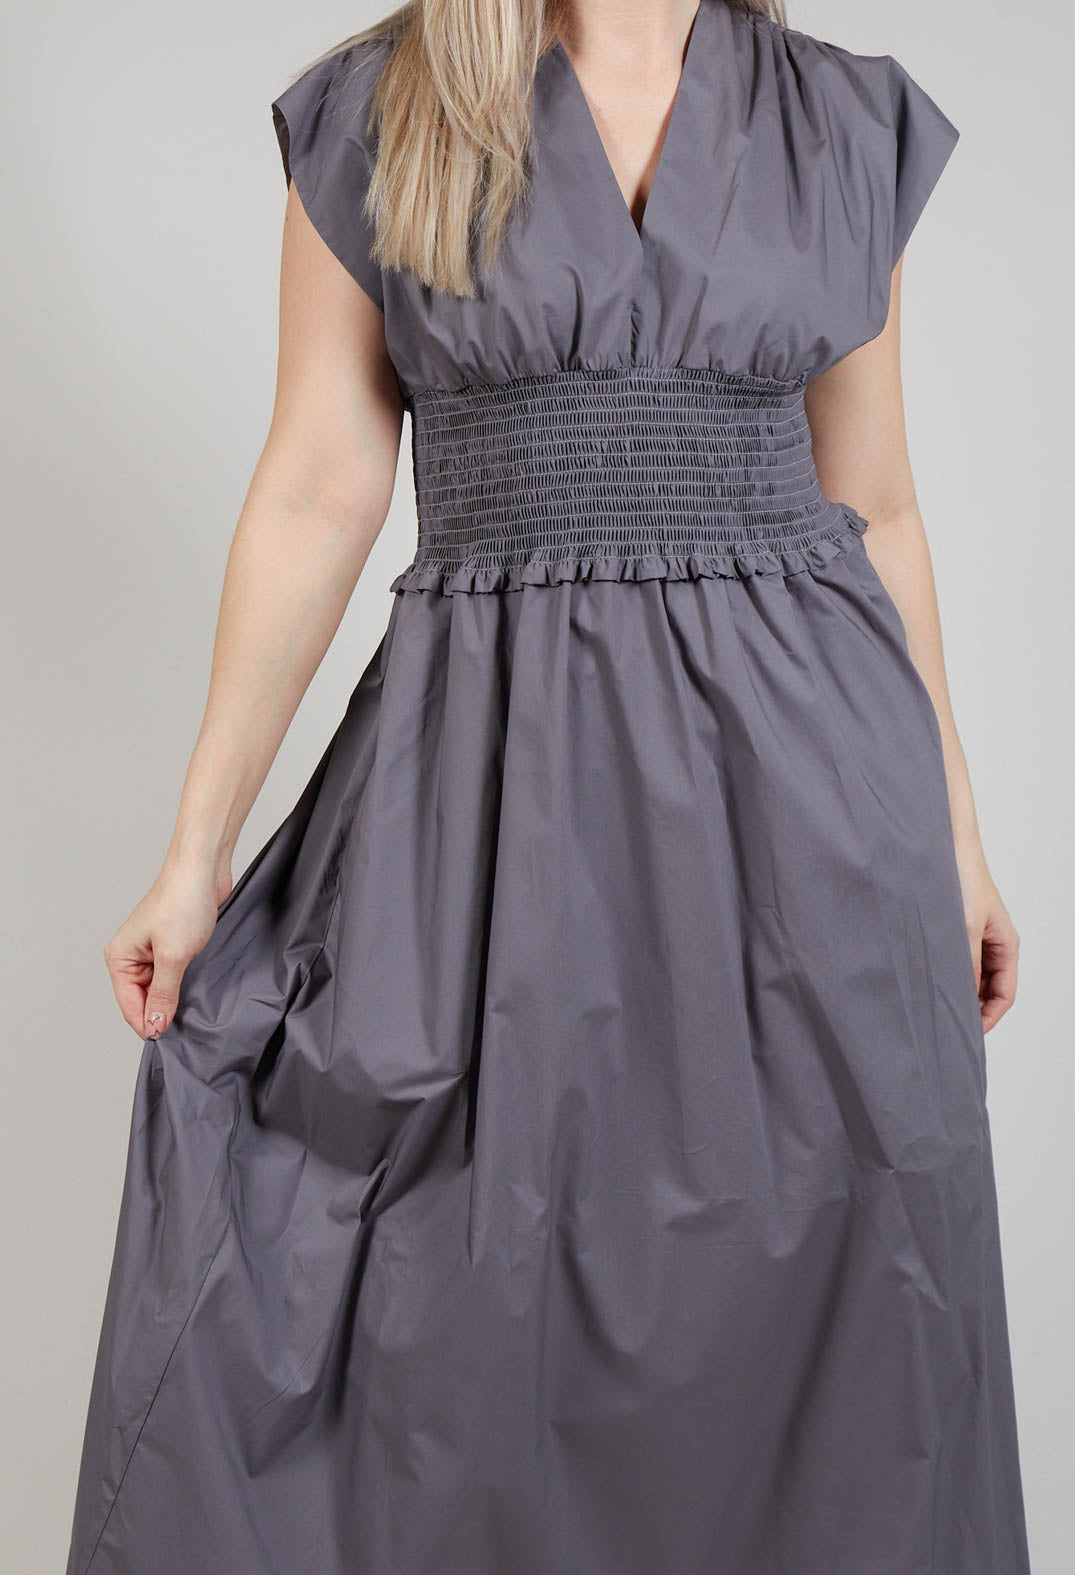 Shirred Waist Dress in Grey Purple